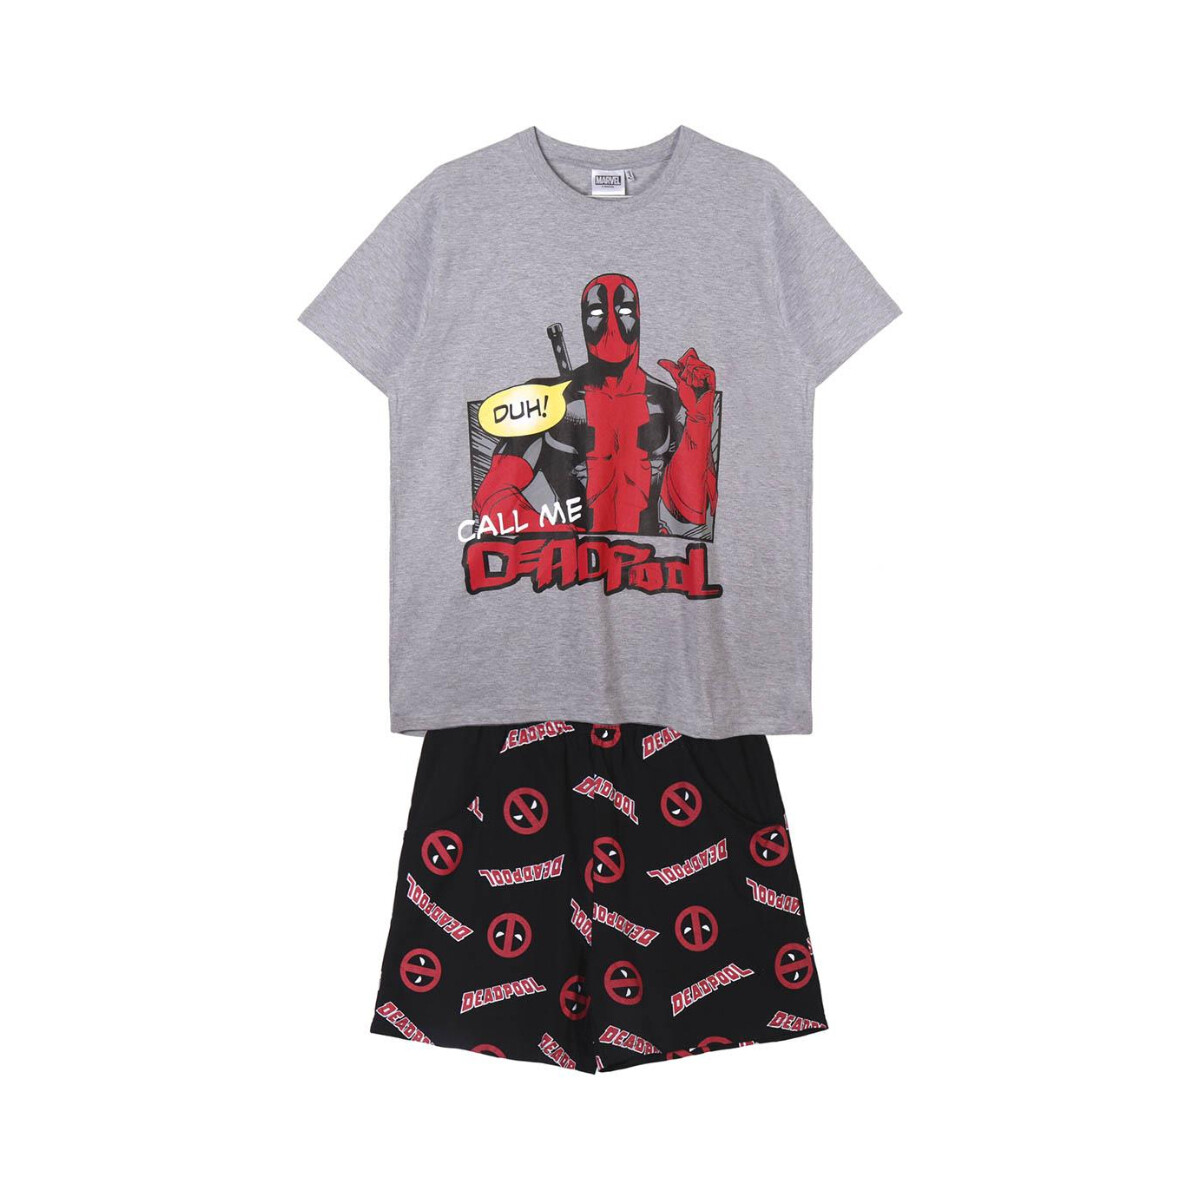 textil Hombre Pijama Deadpool 2200008899 Gris